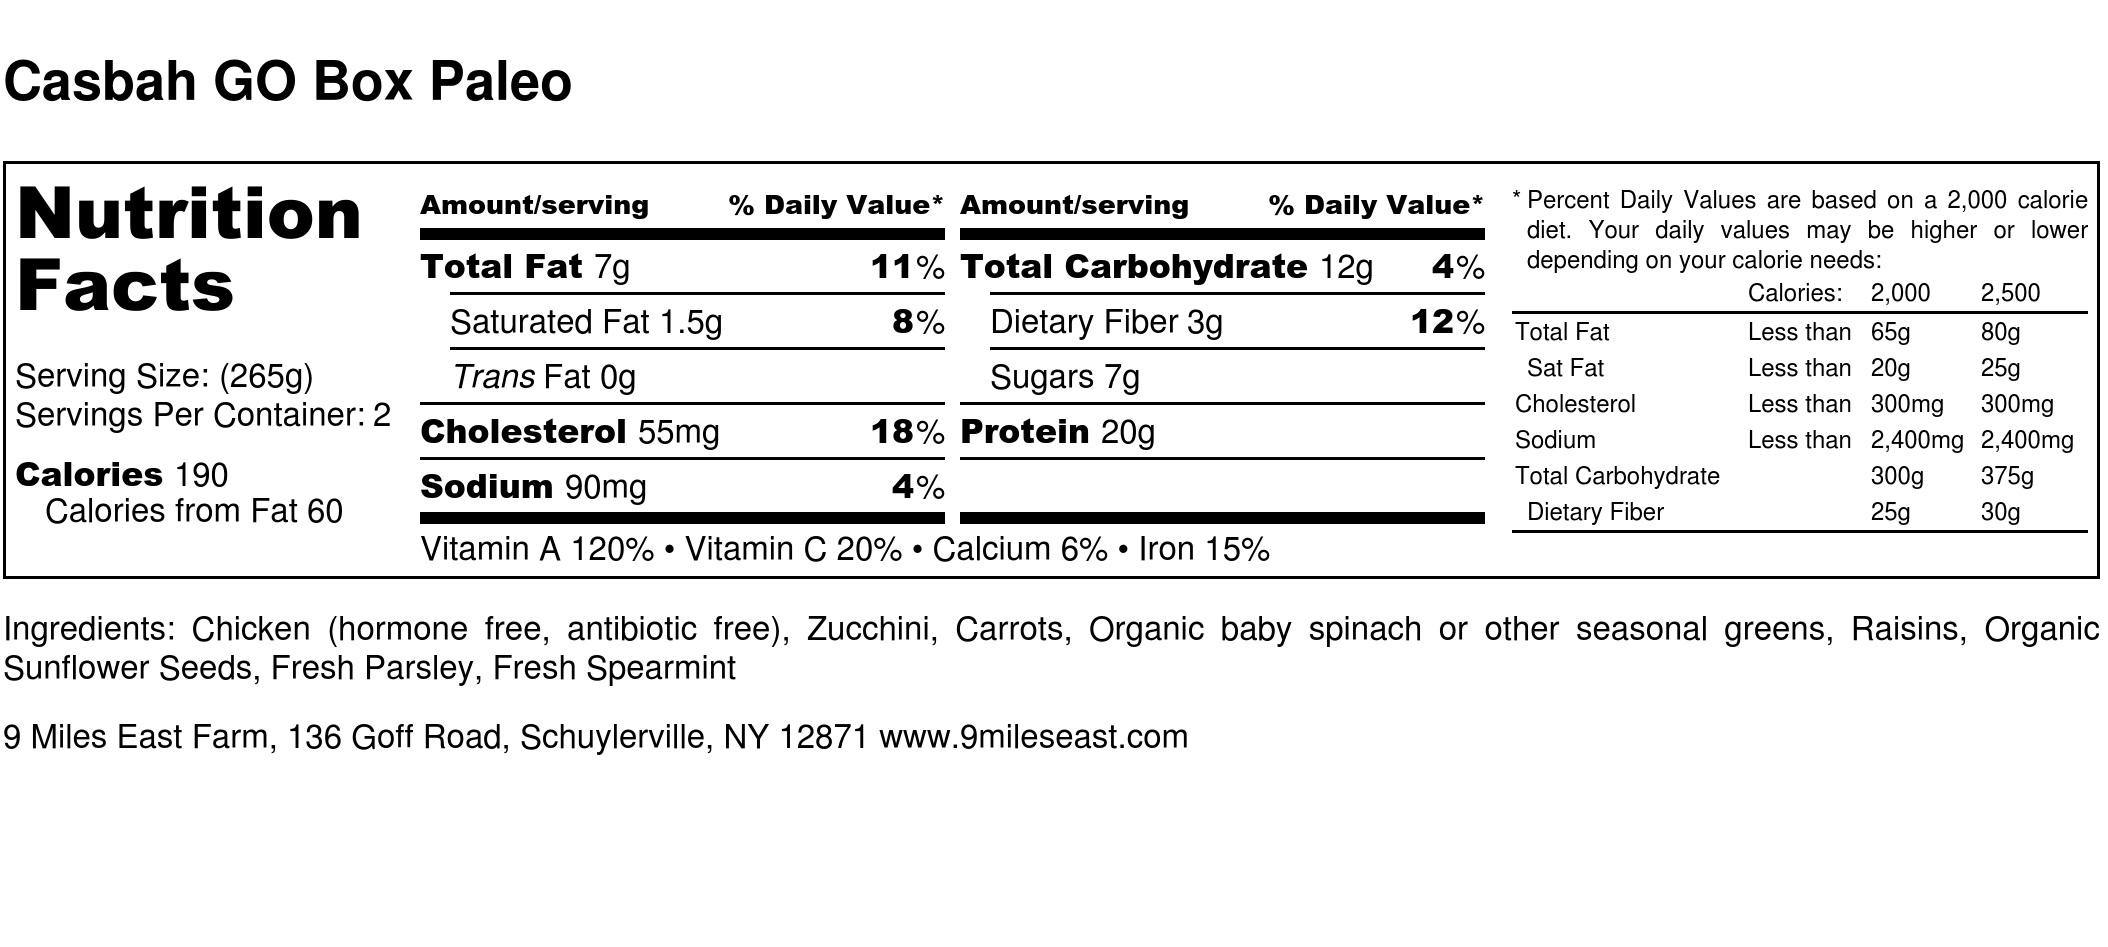 Casbah GO Box Paleo - Nutrition Label.jpg